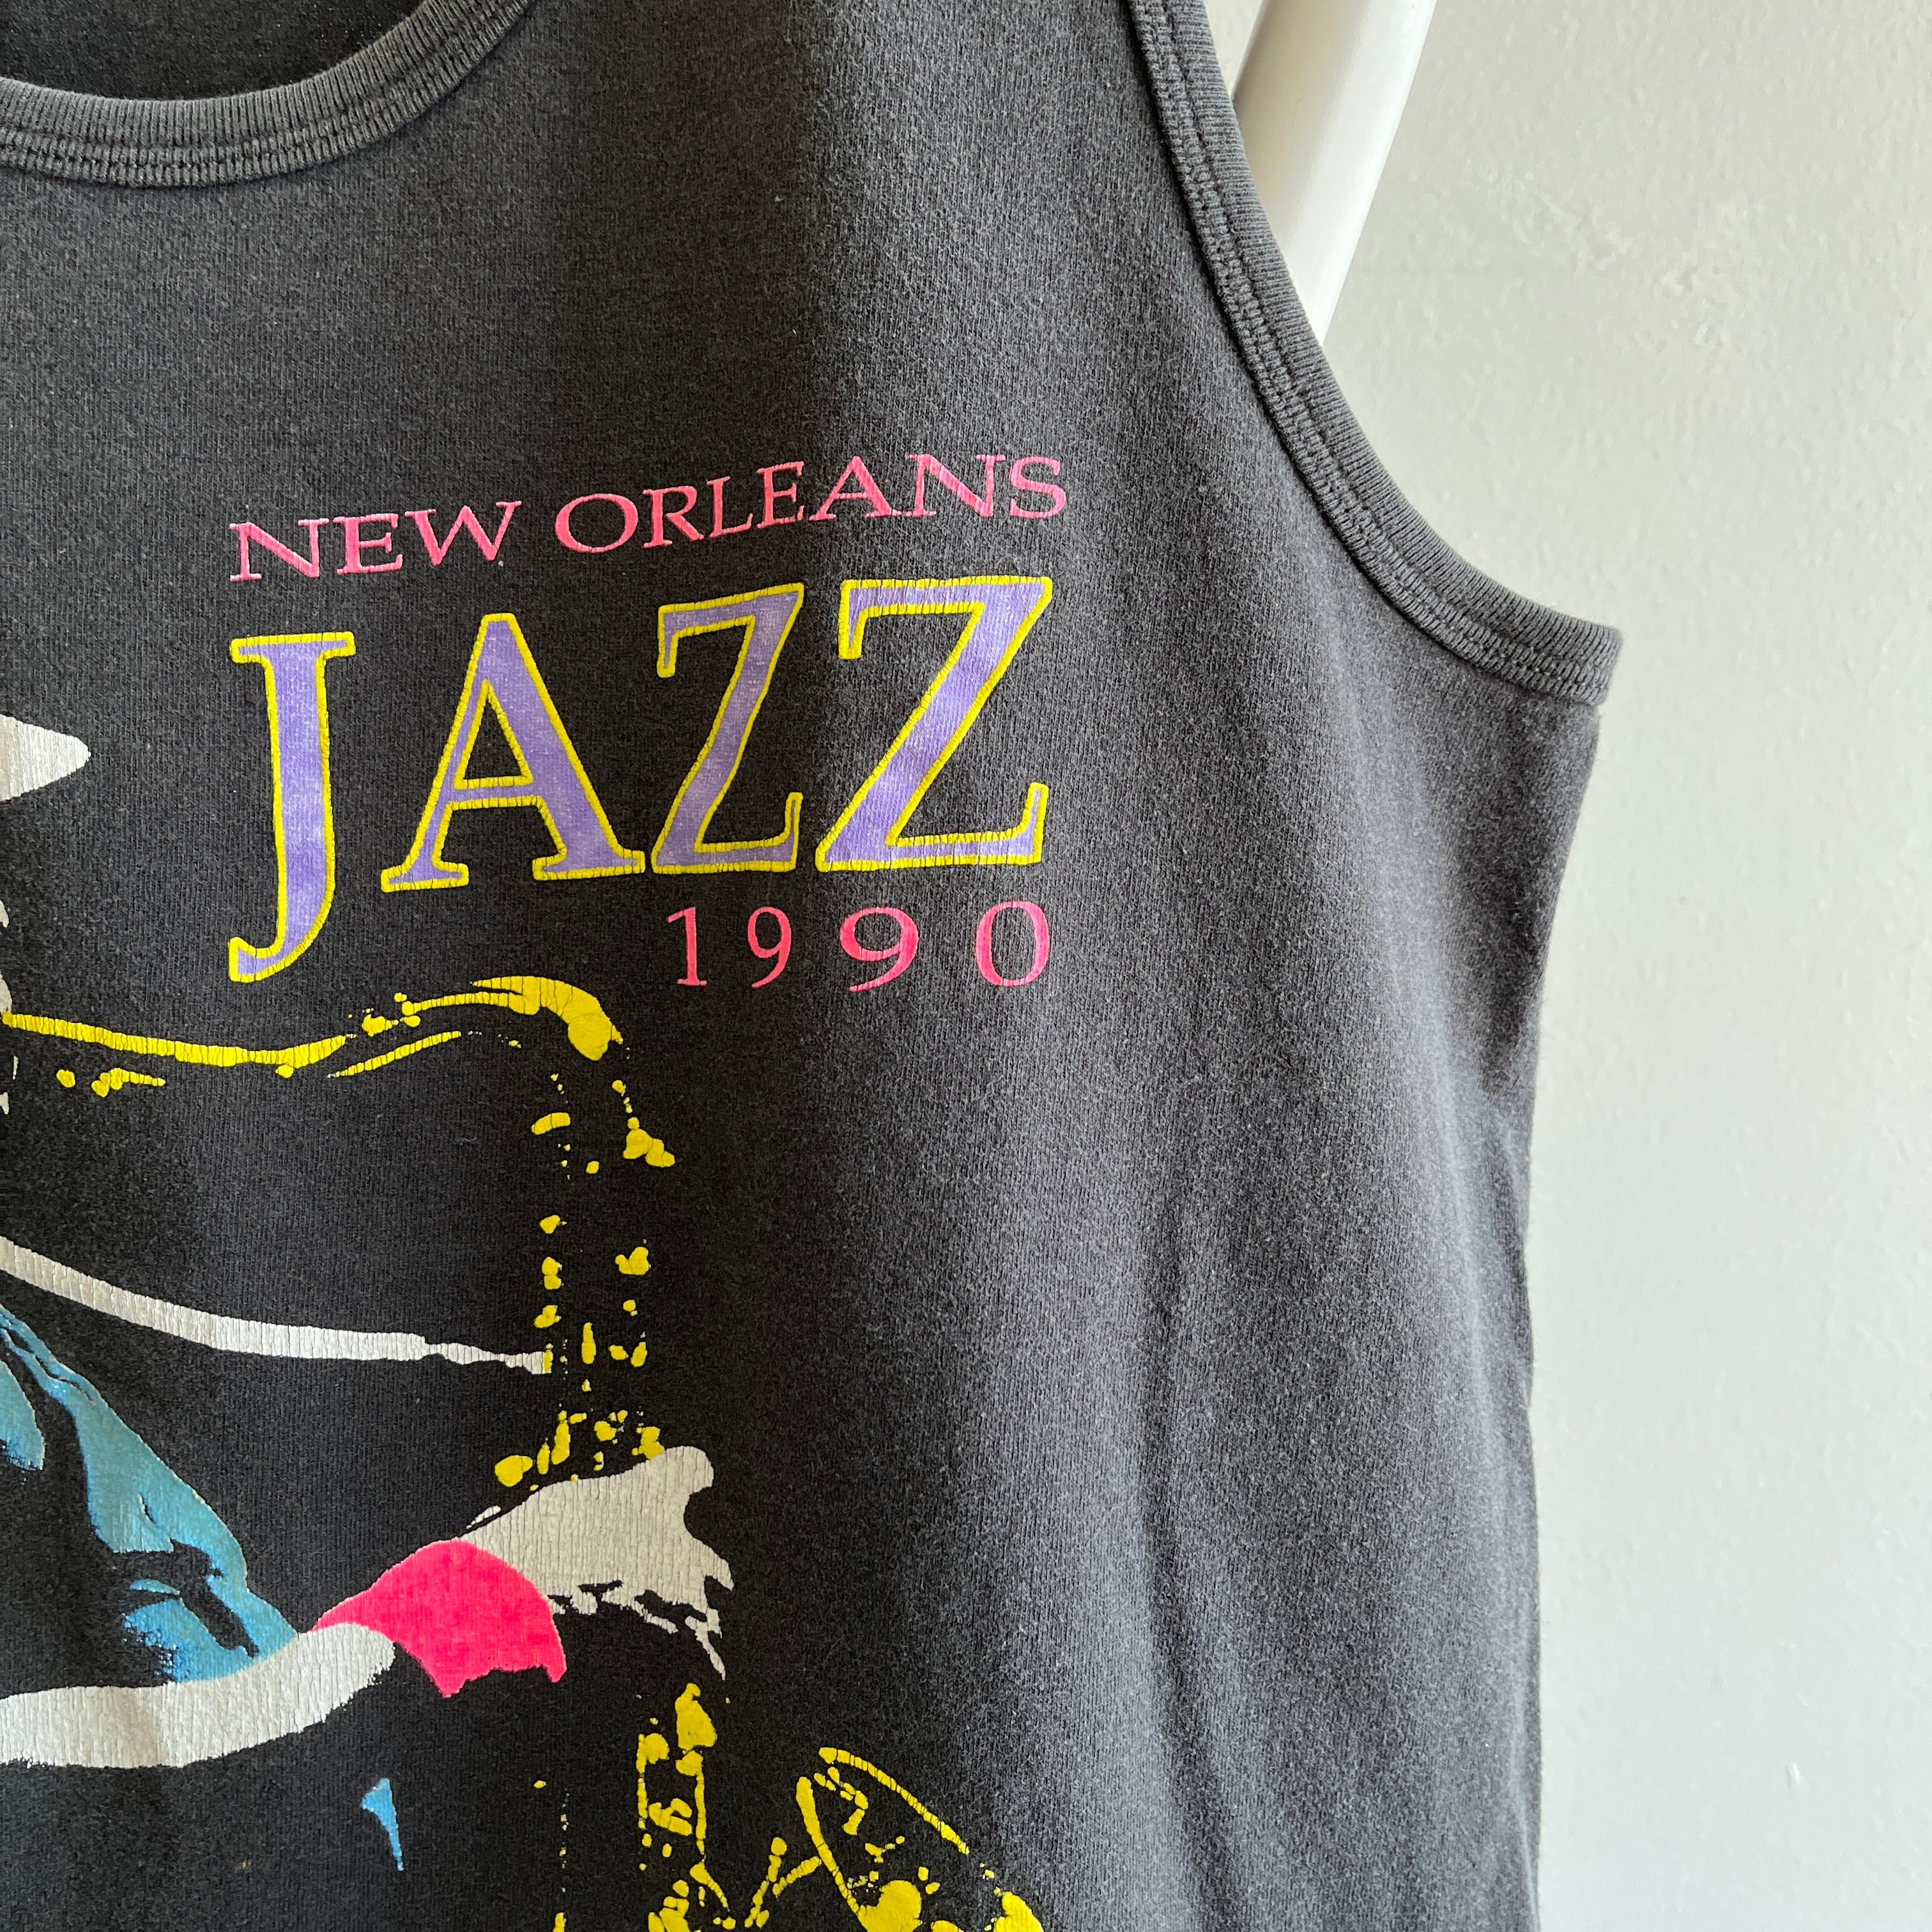 1990 New Orleans Jazz Festival Cotton Tank Top